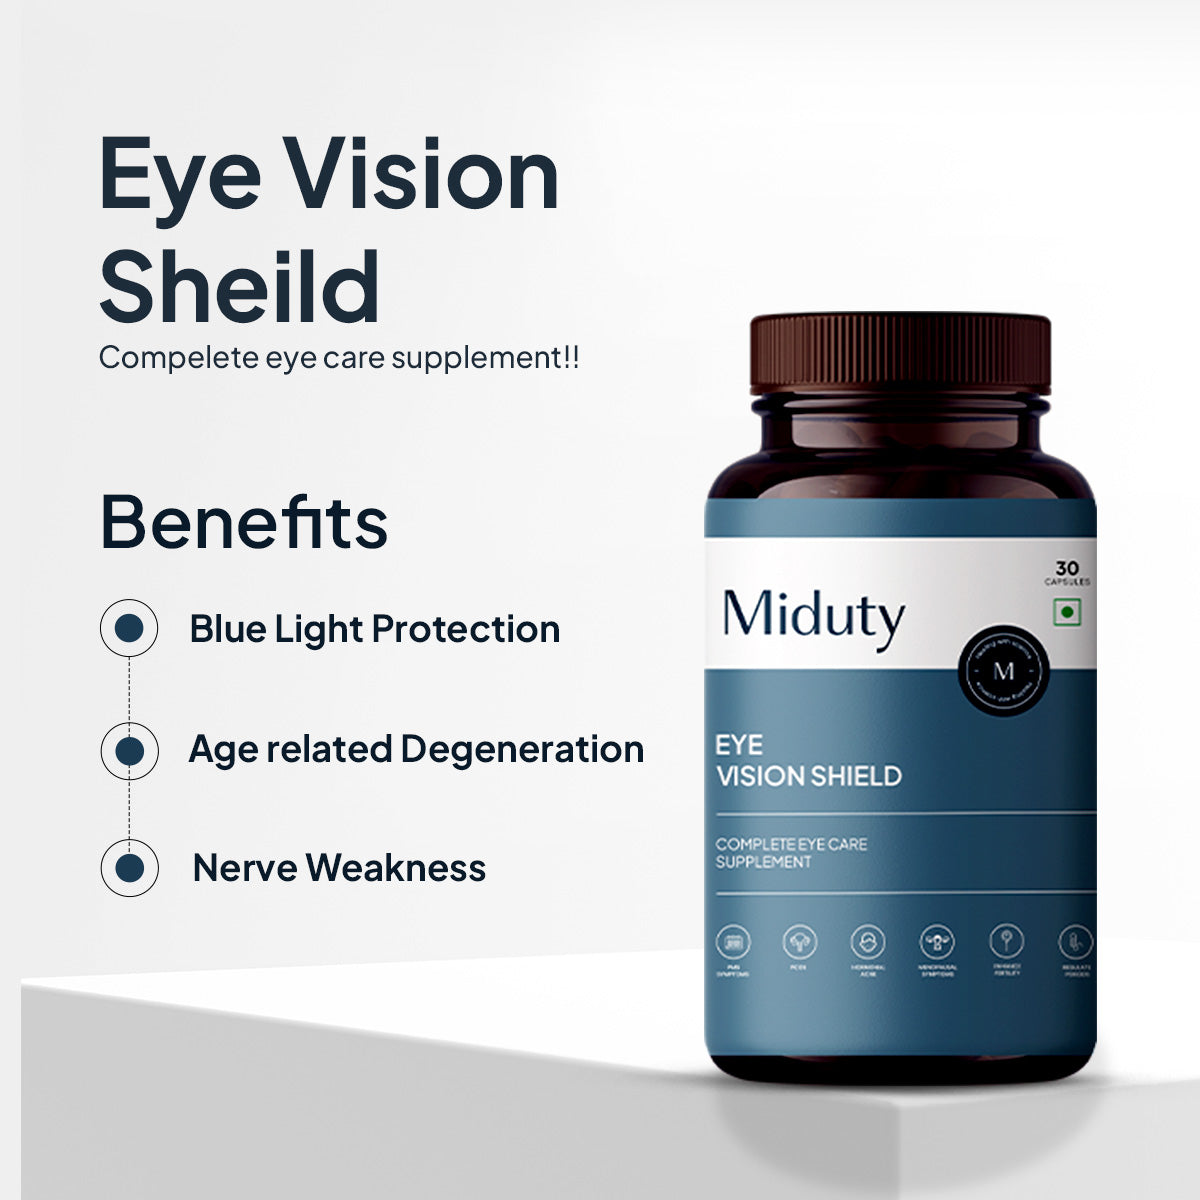 Eye Vision Shield